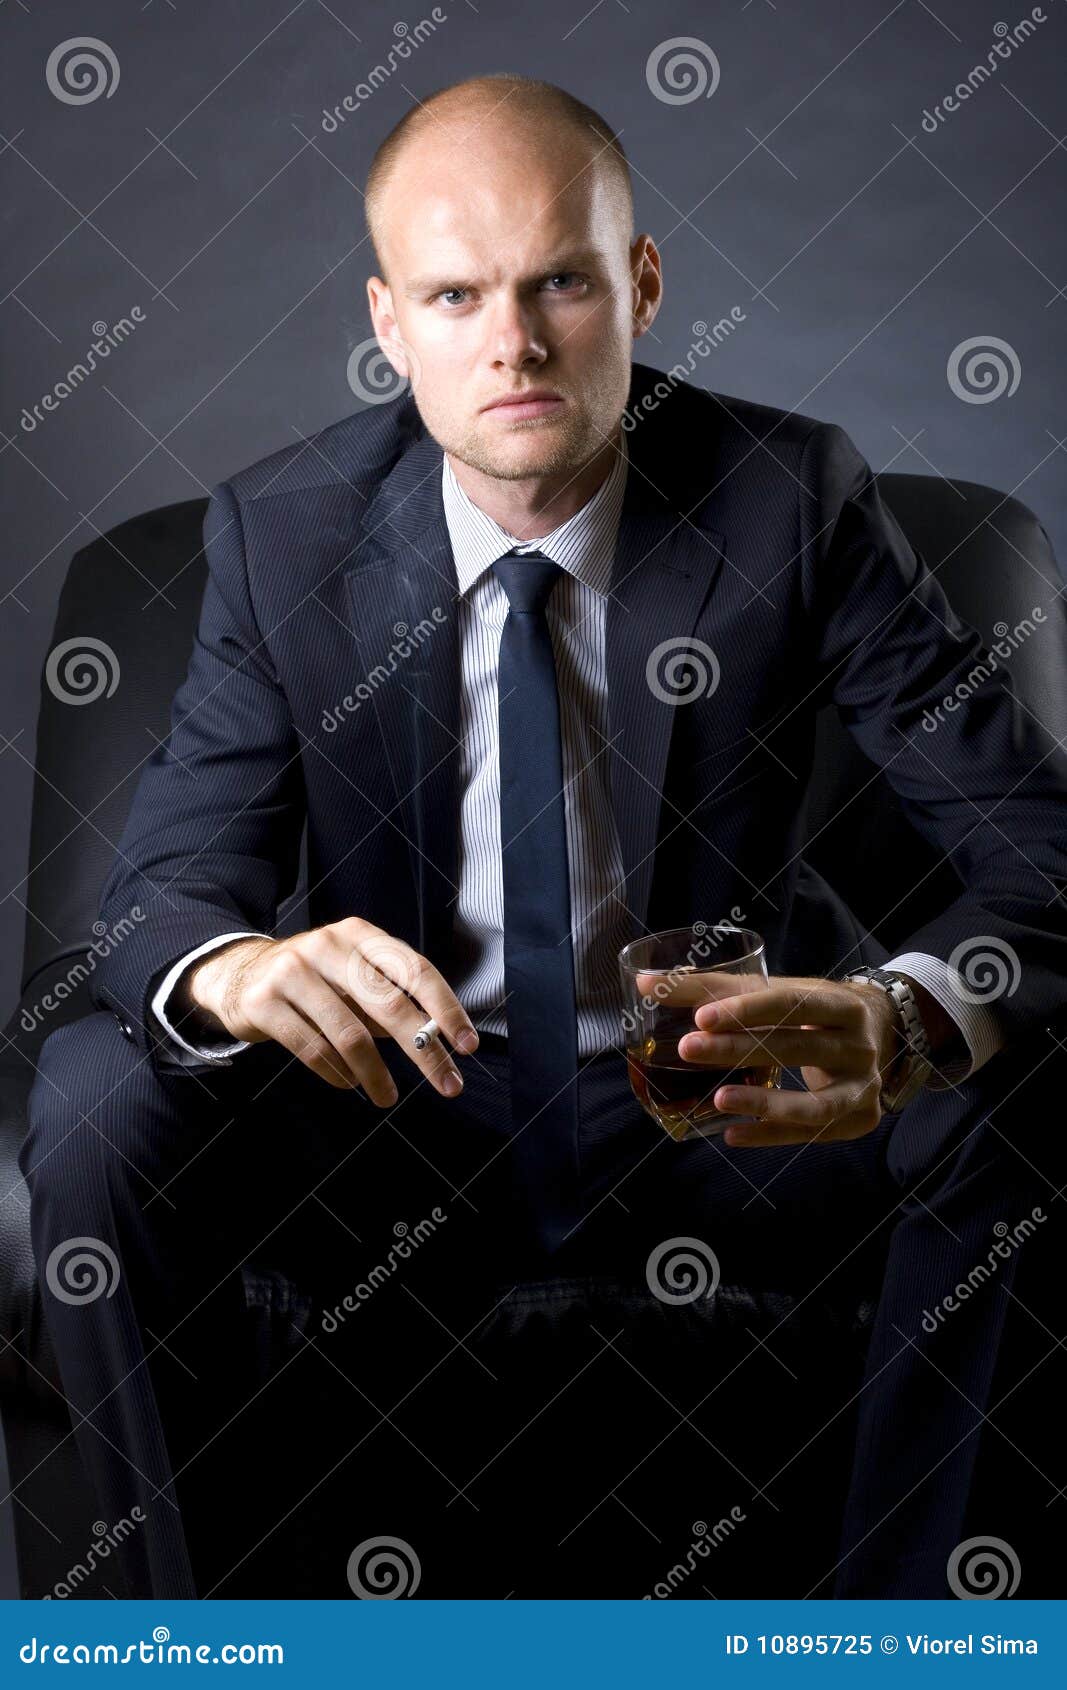 Rich Man Smoking A Cigarette Royalty Free Stock Photo 